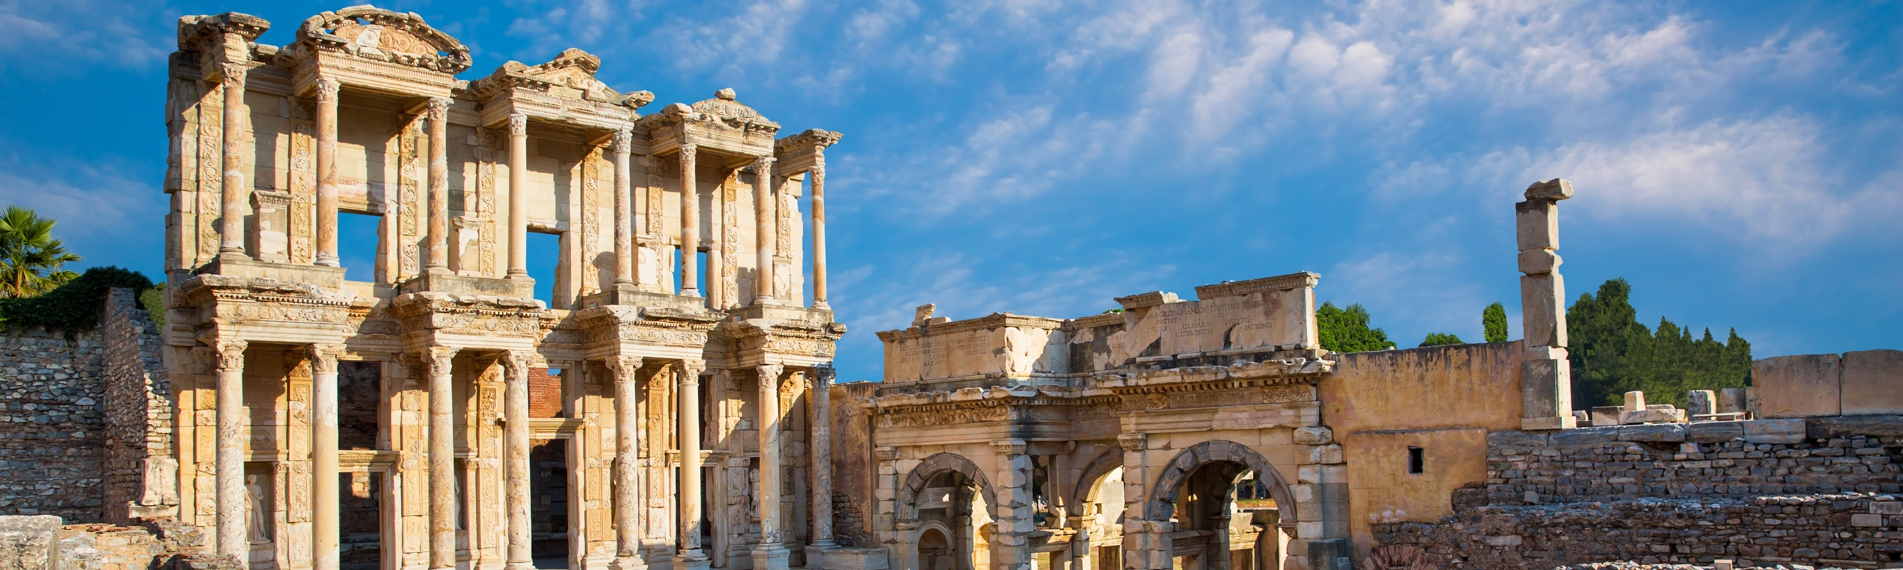 Celsus library near Kusadasi in Turkey.